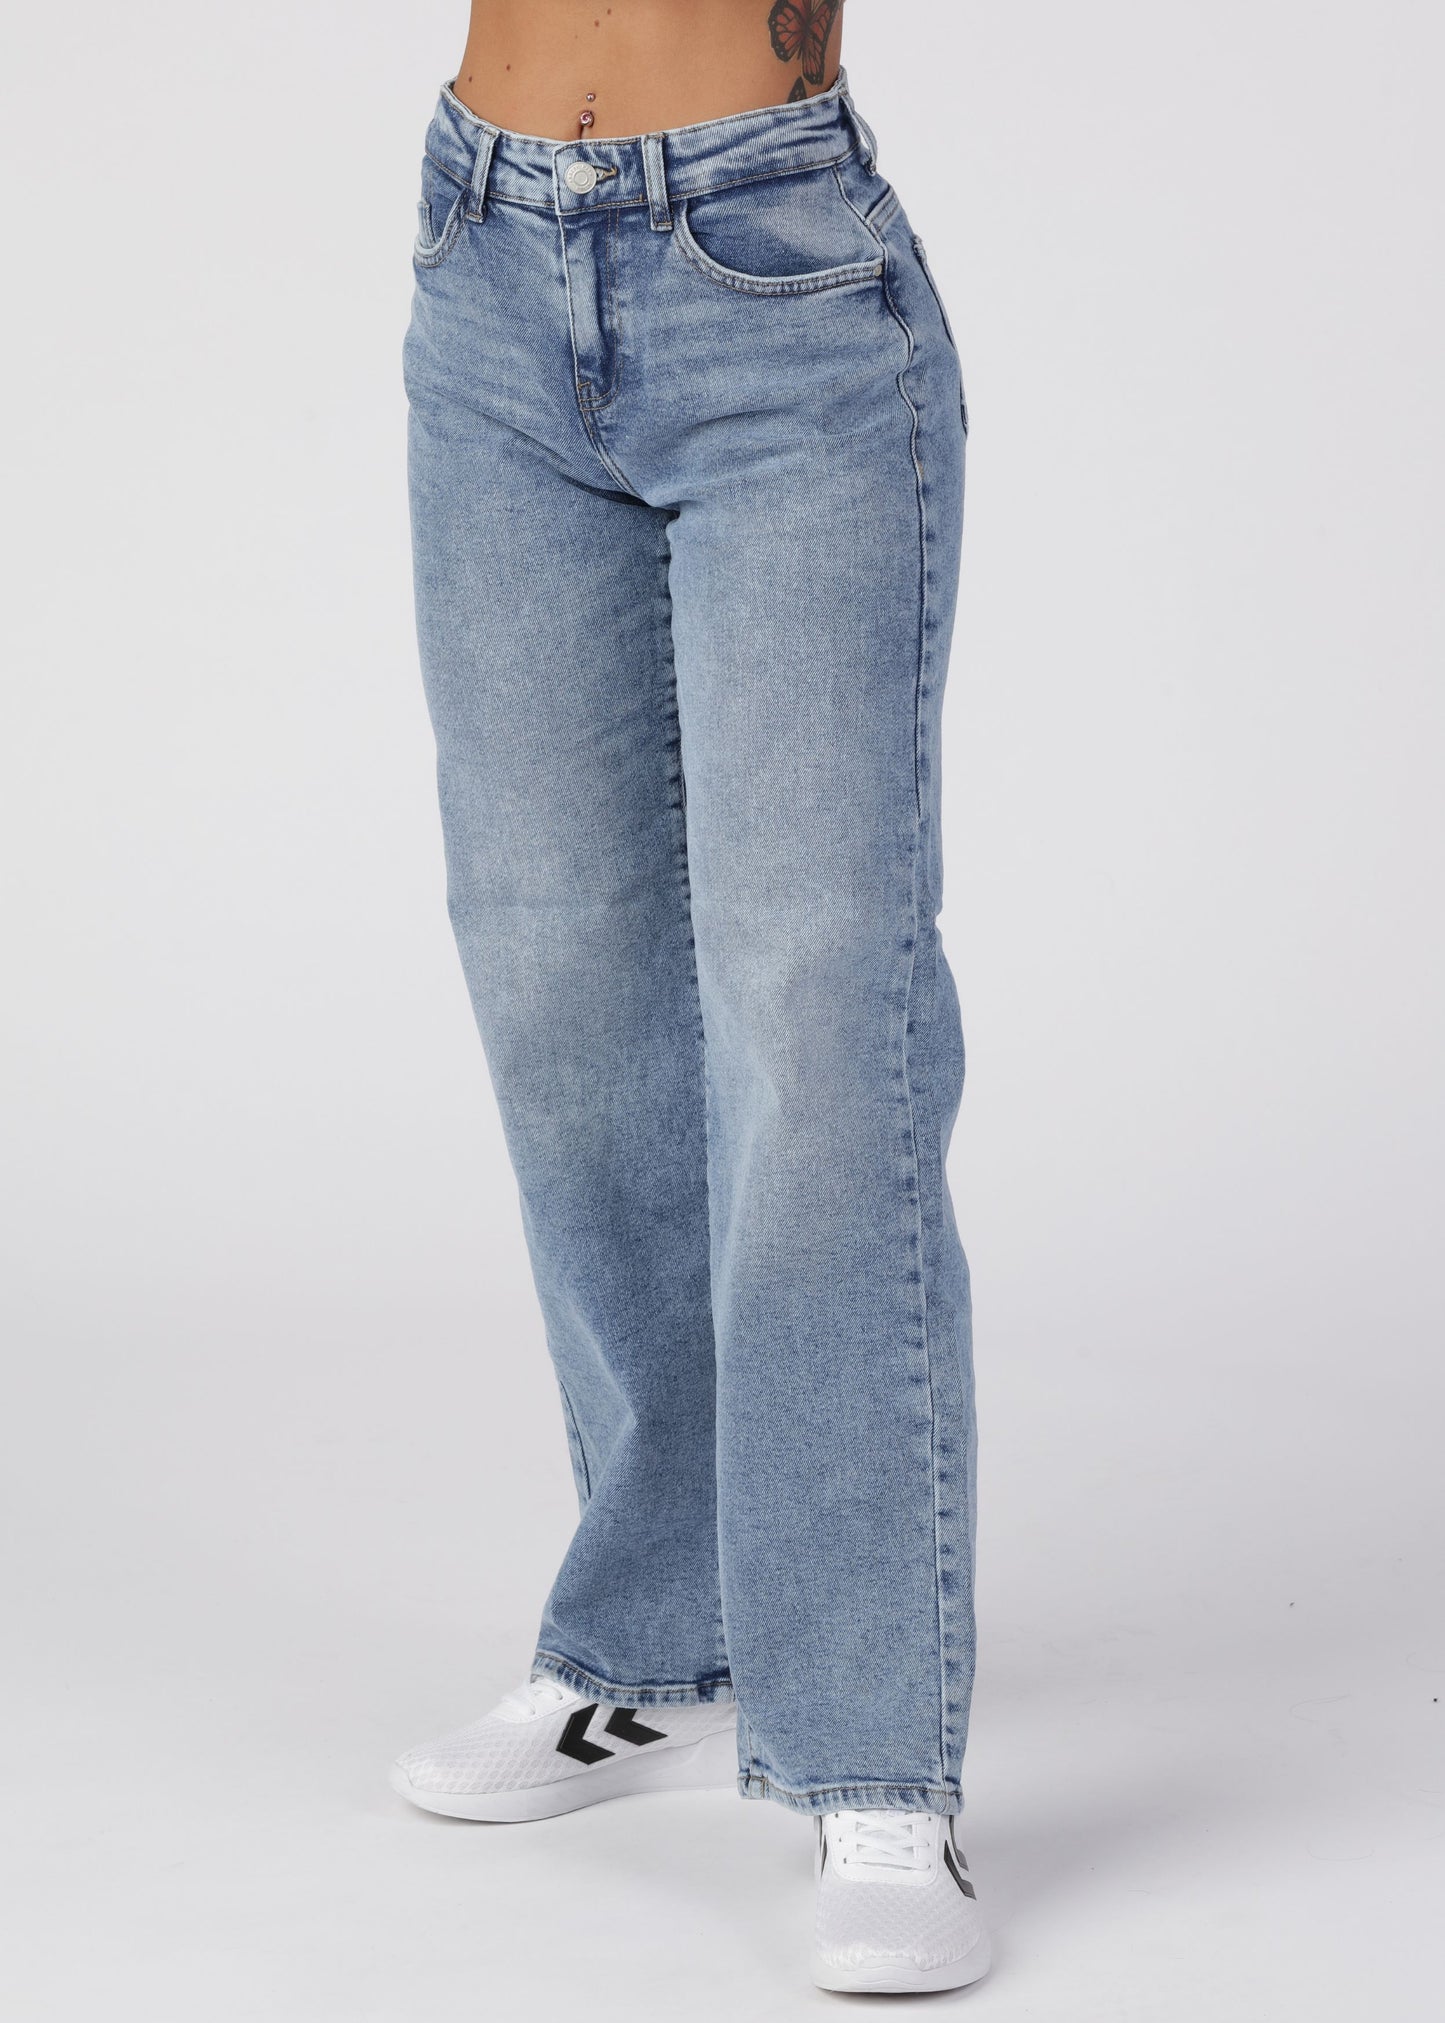 Yolanda Jeans - Light Blue - for kvinde - NOISY MAY - Jeans